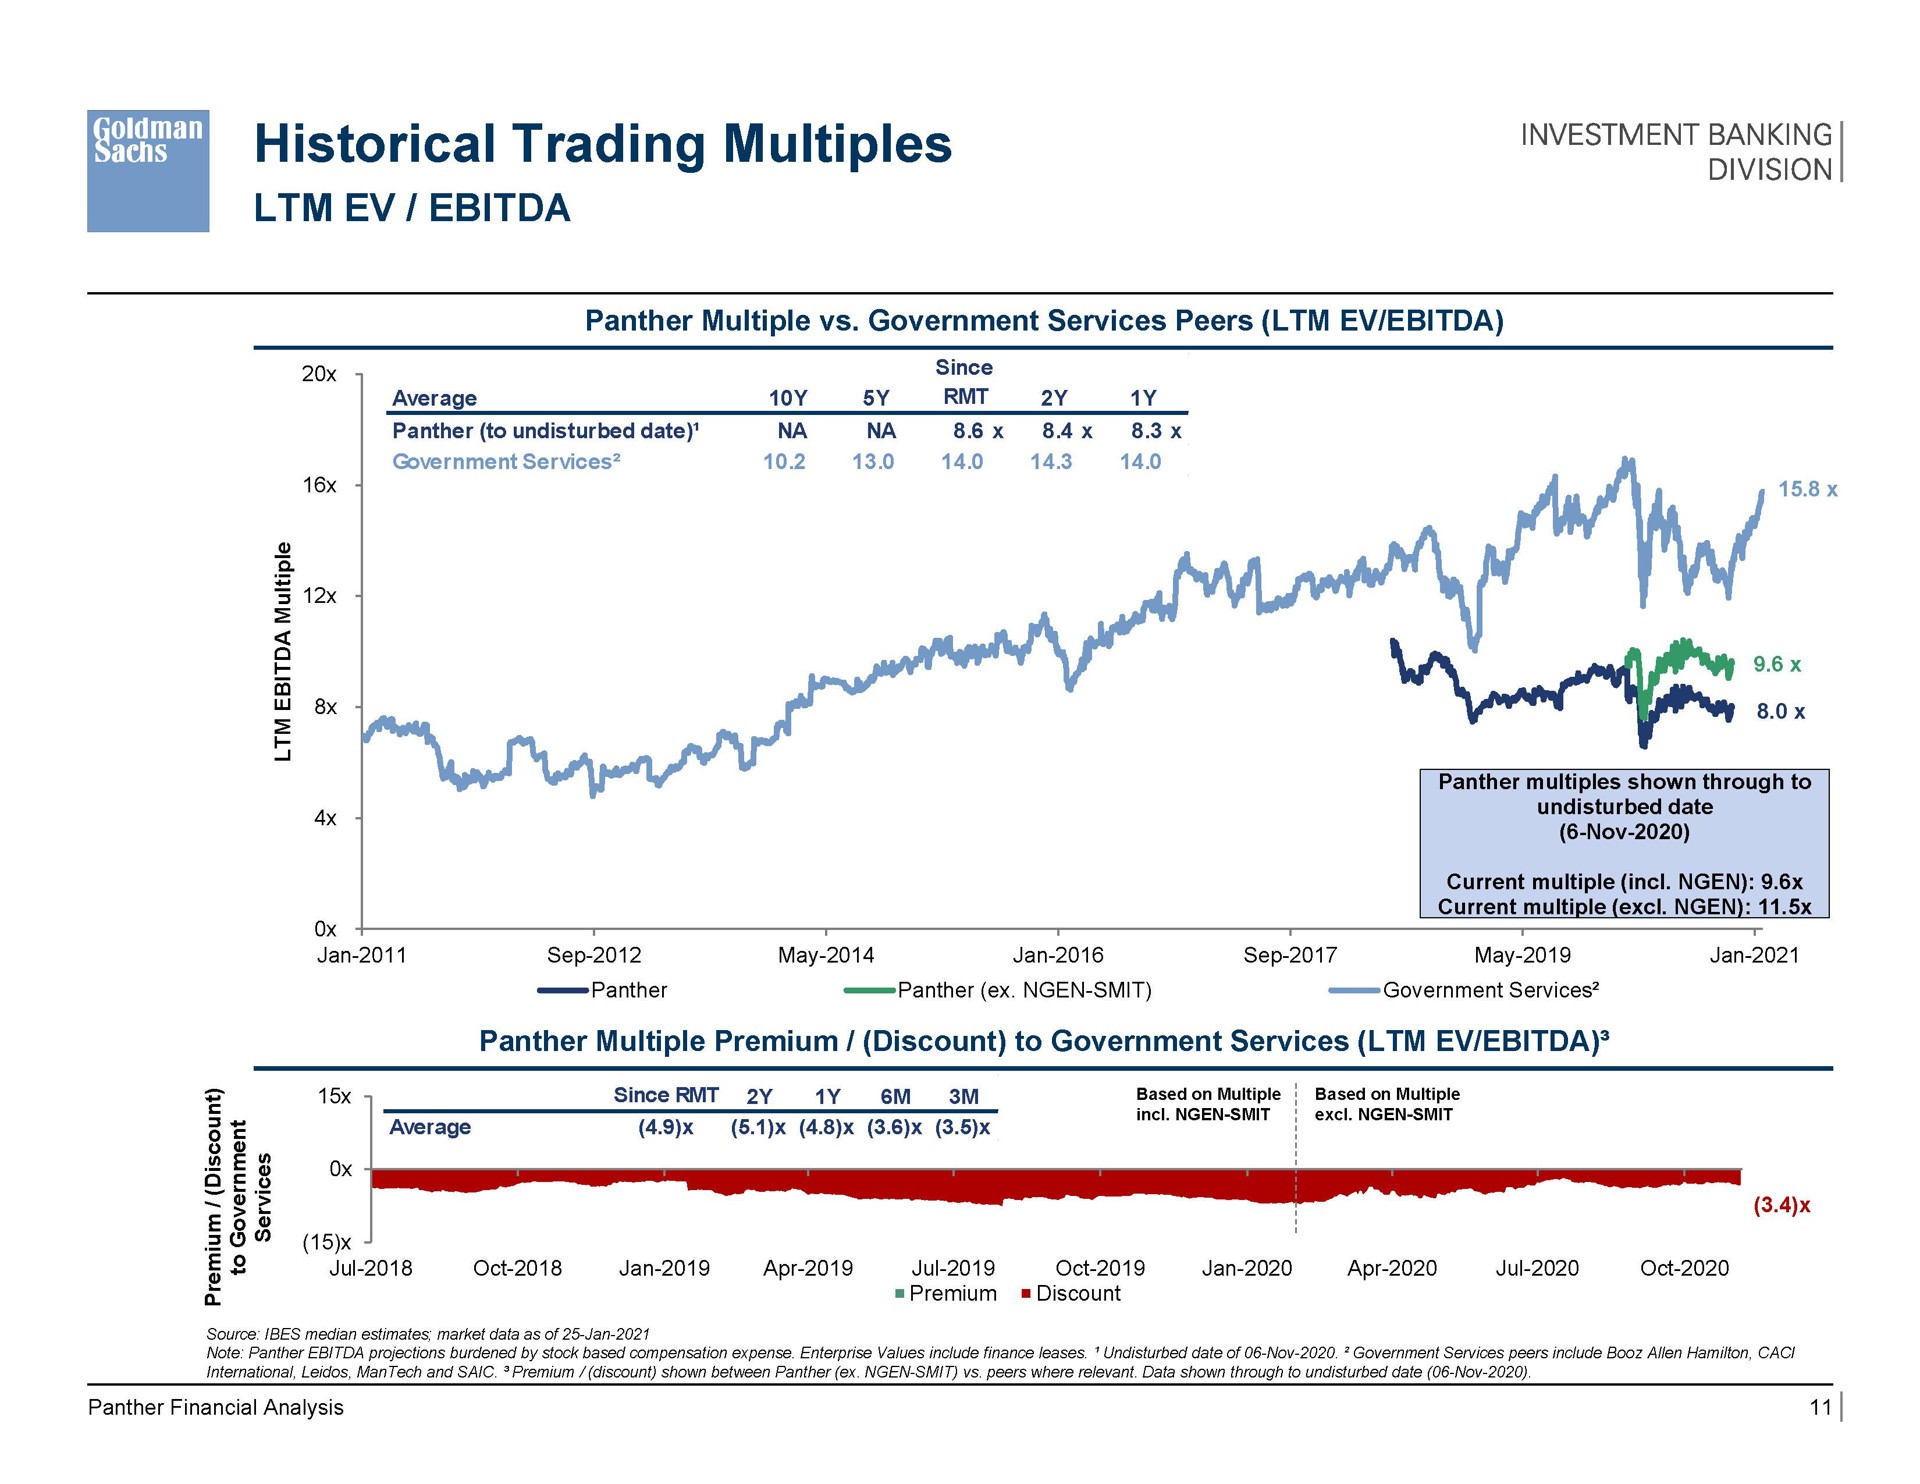 historical trading multiples division | Goldman Sachs